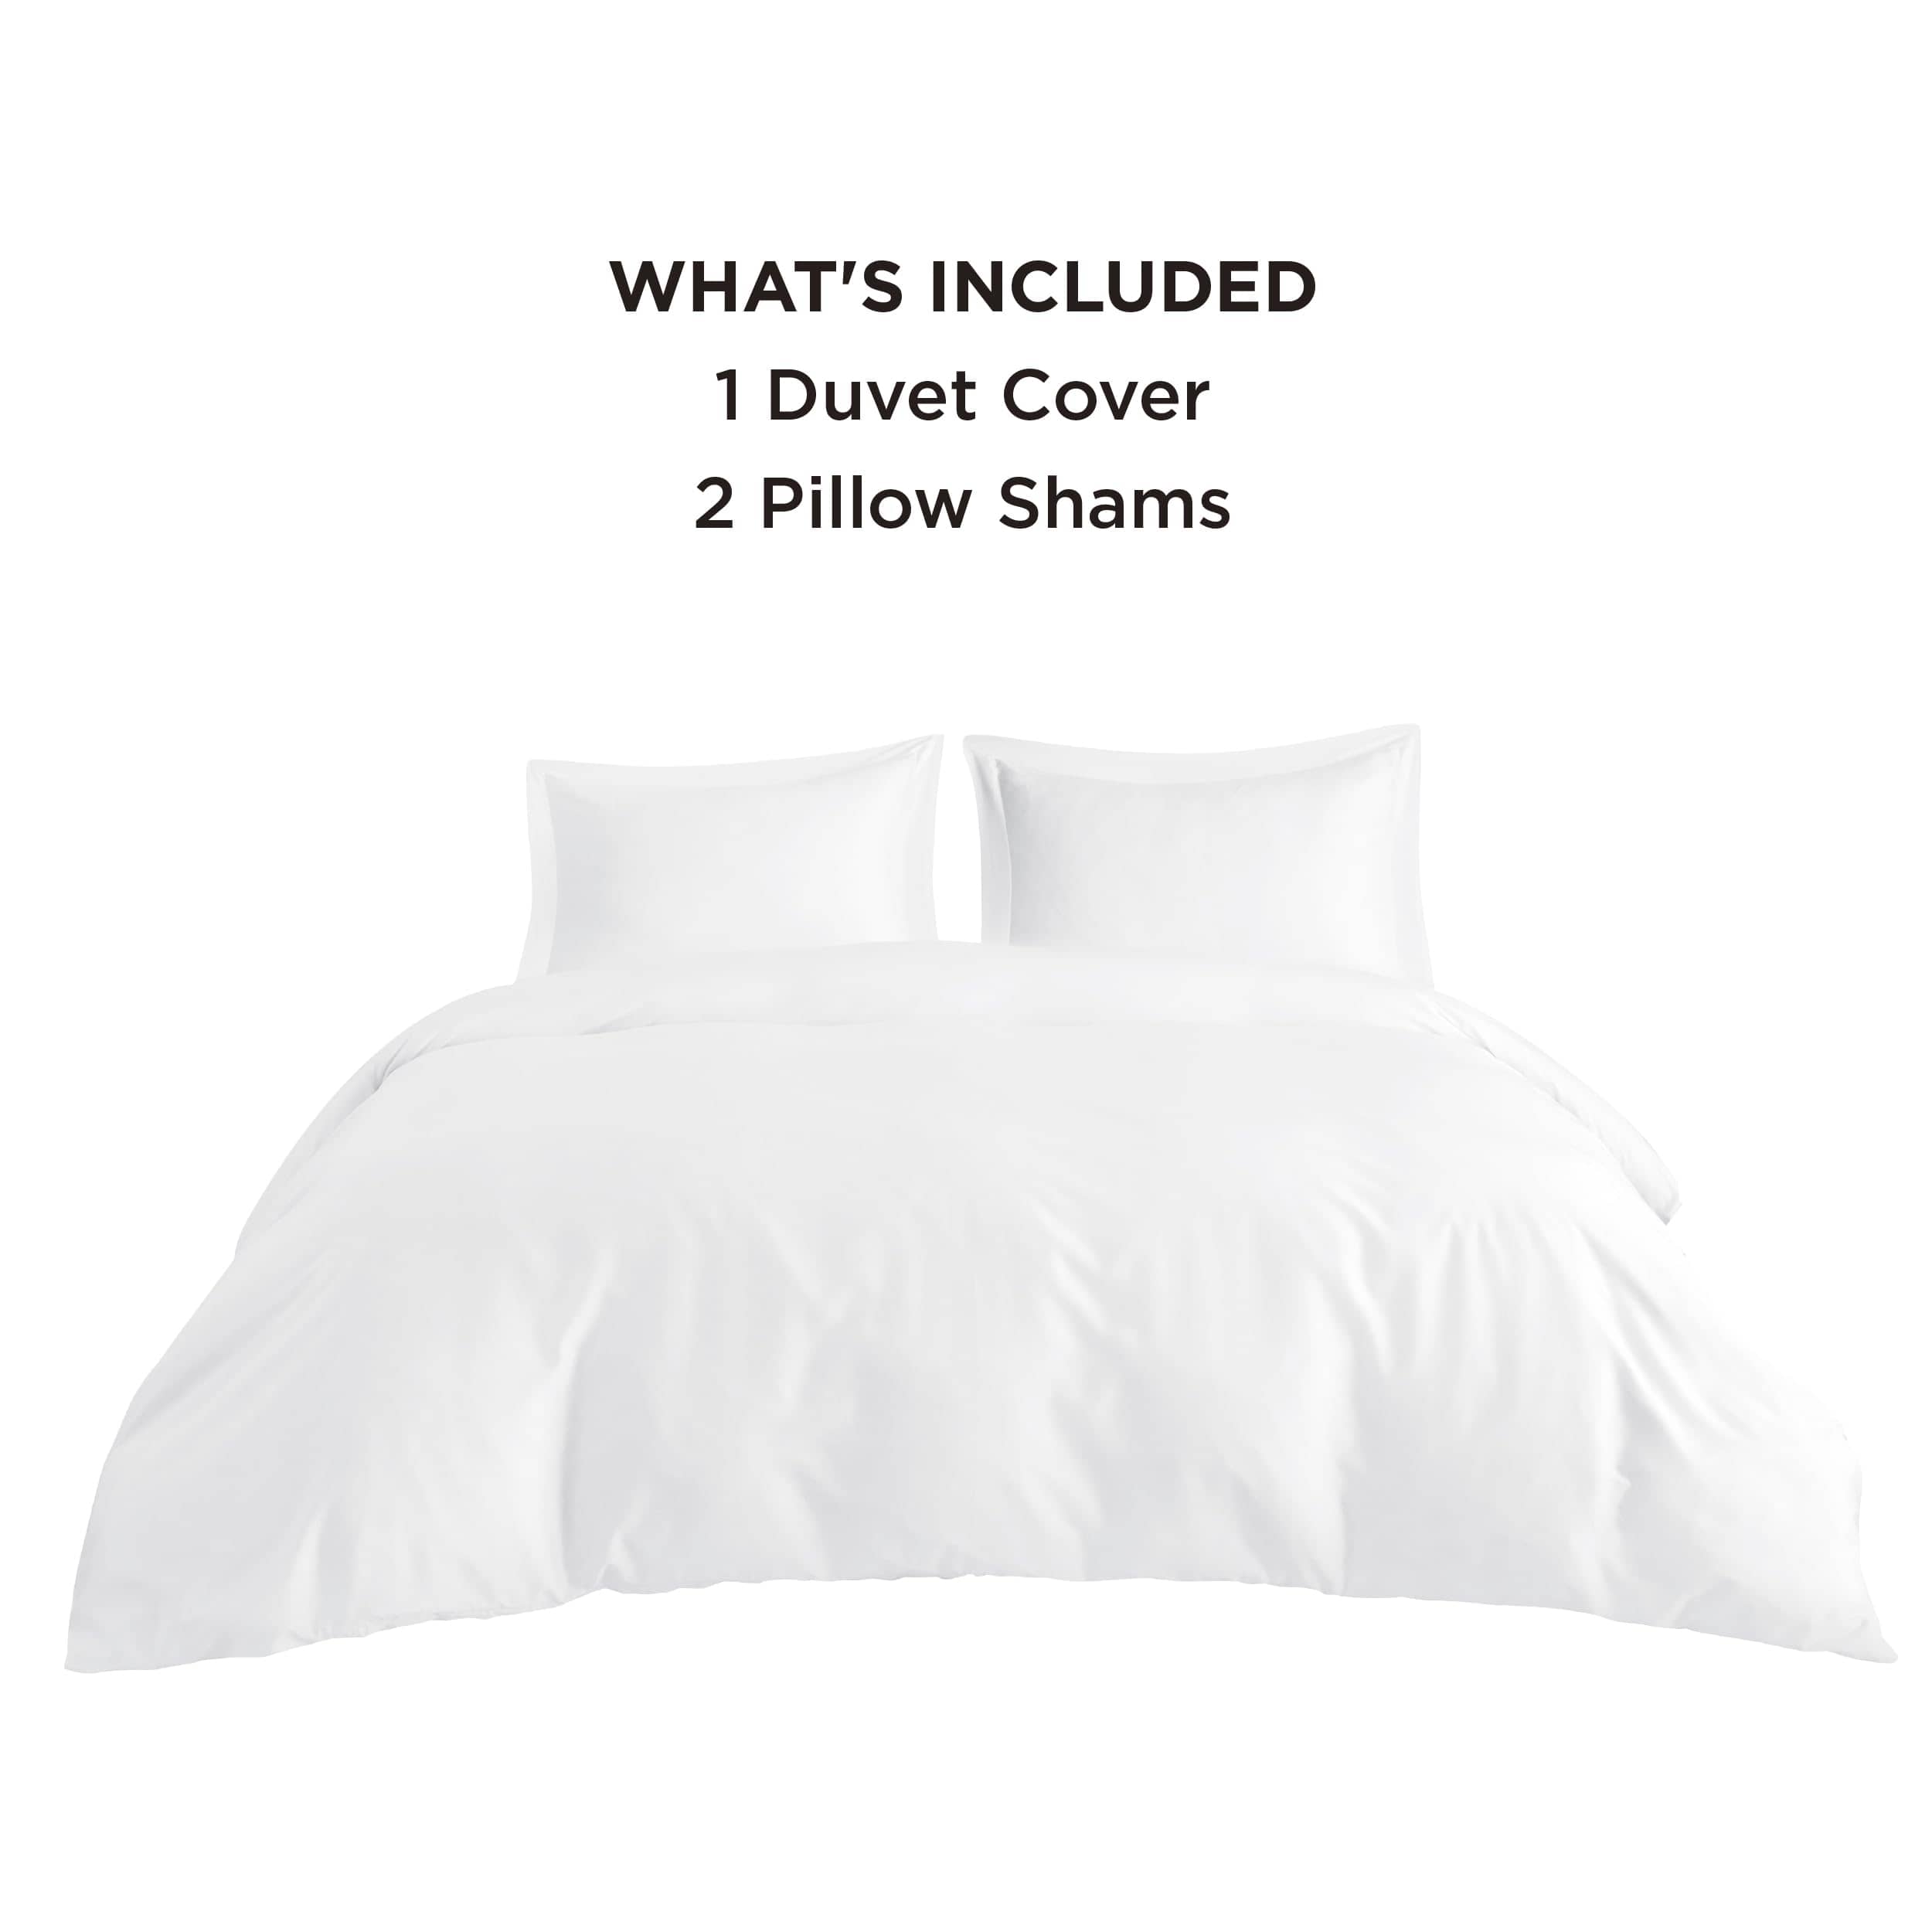 Bedsure Breathable Lyocell Cotton Duvet Cover Set